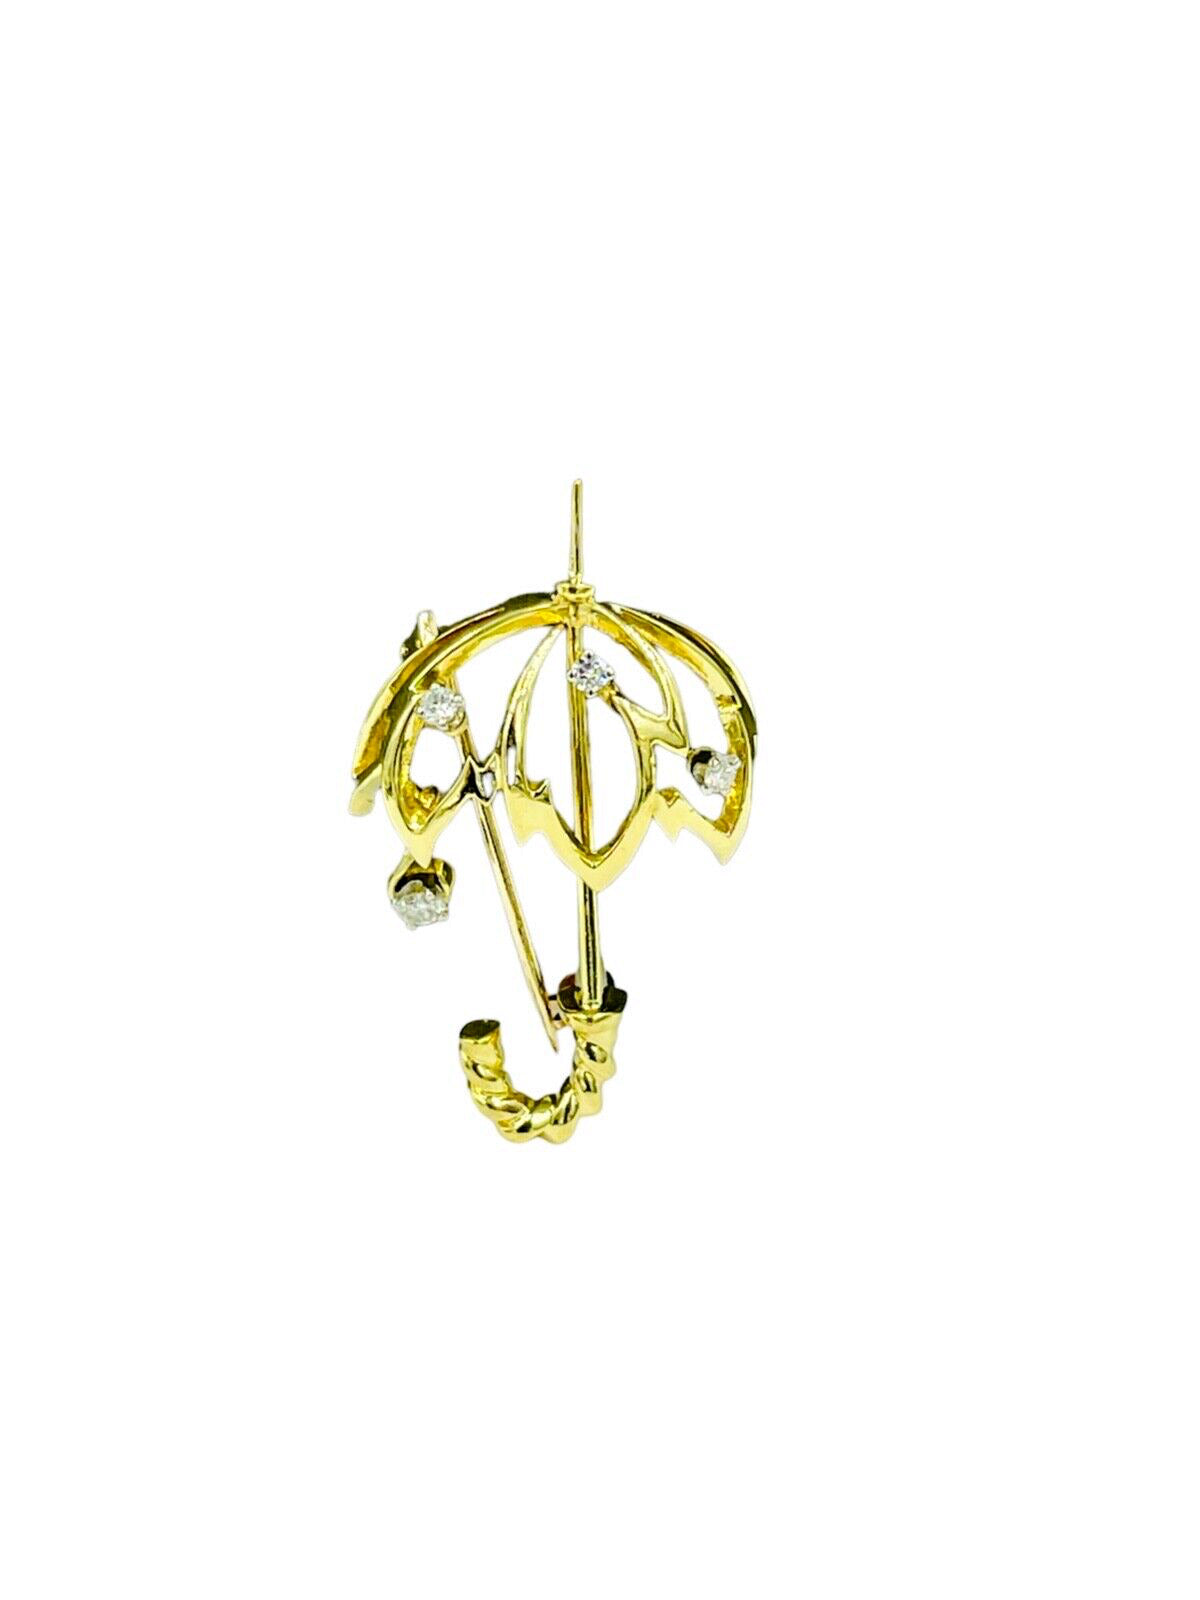 Vintage Kurt Wayne Umbrella Diamond Brooch Pin 18K Yellow Gold